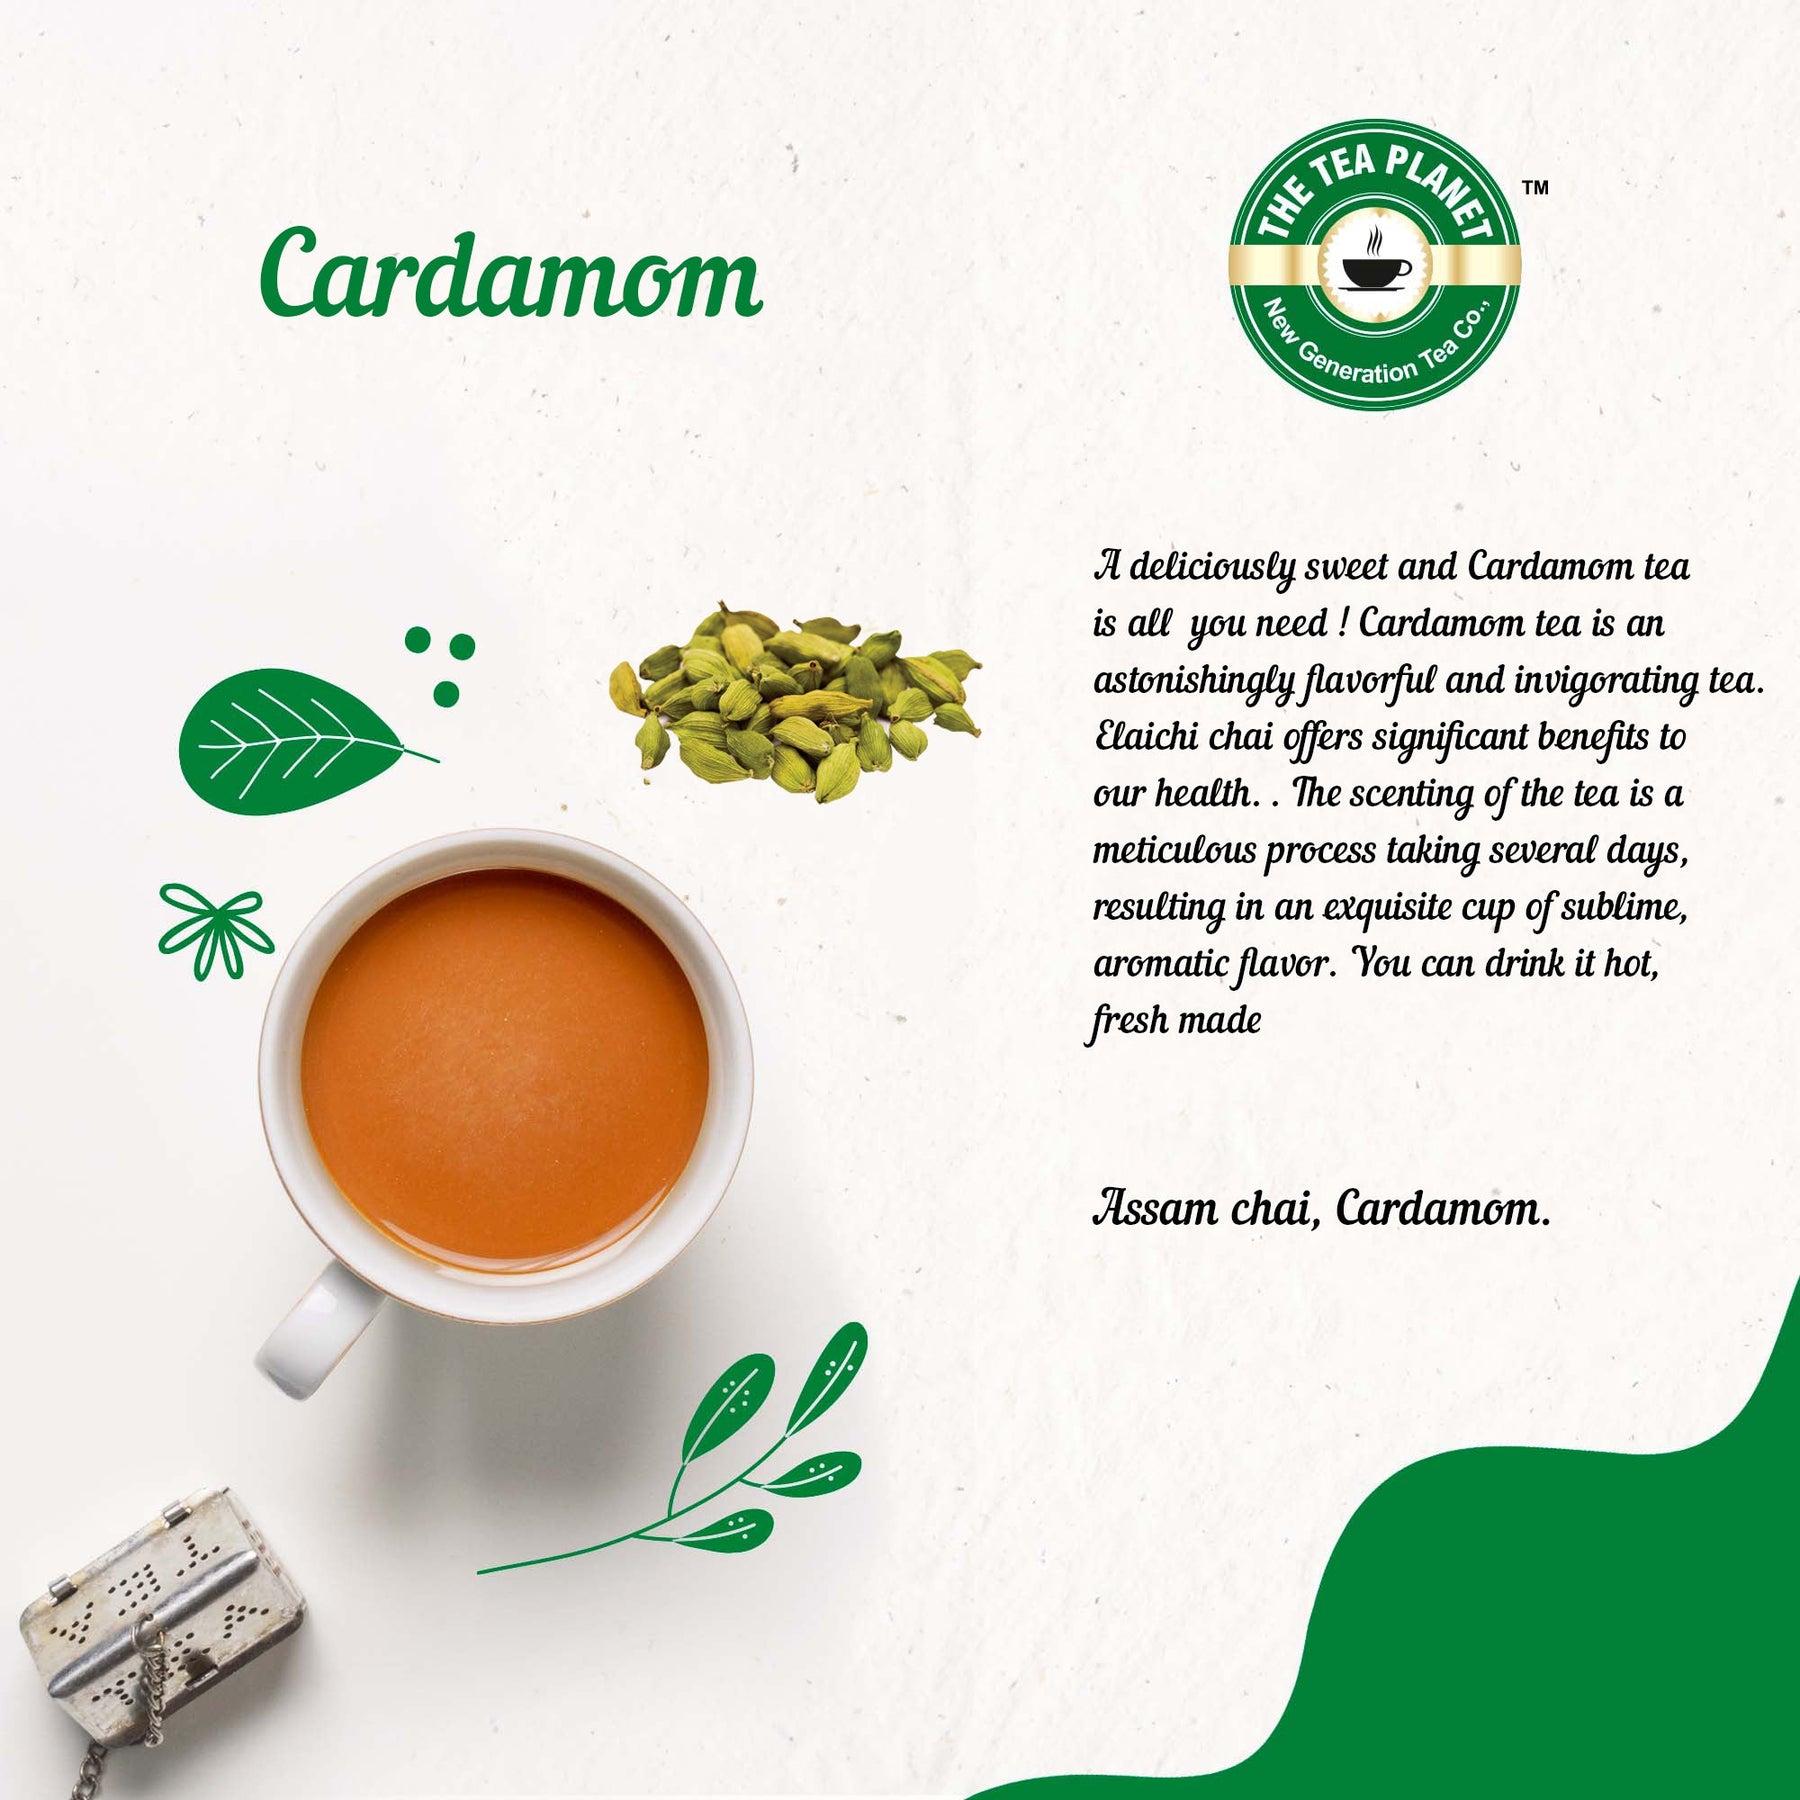 Cardamom Flavored CTC Tea - 200 gms